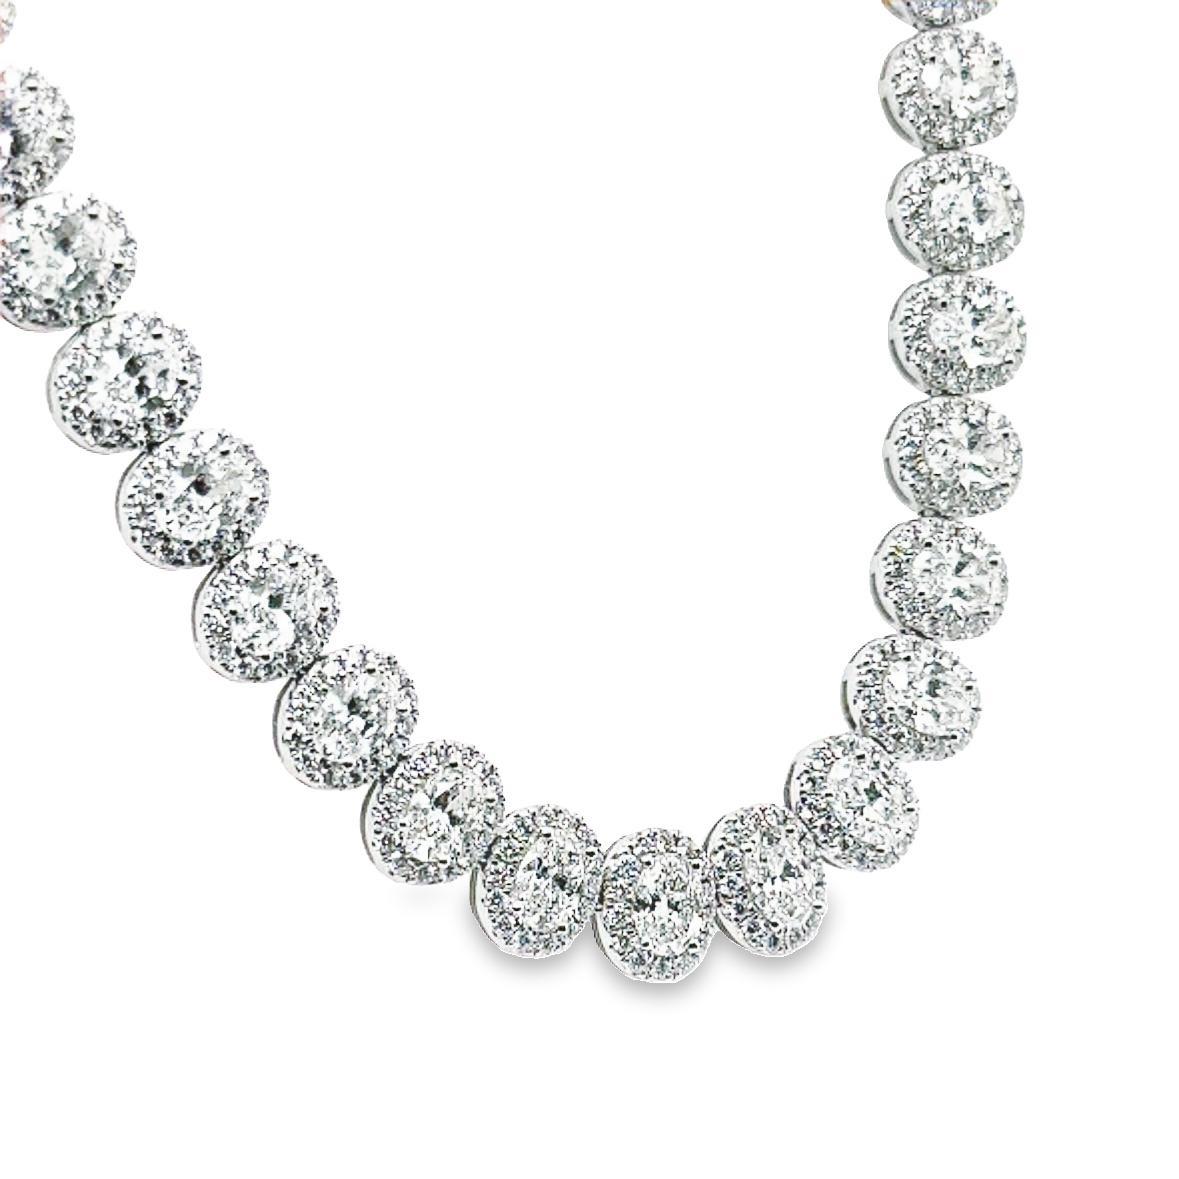 Modern Exquisite 20.93 Carat T.W. Oval-Cut Statement Diamond Necklace